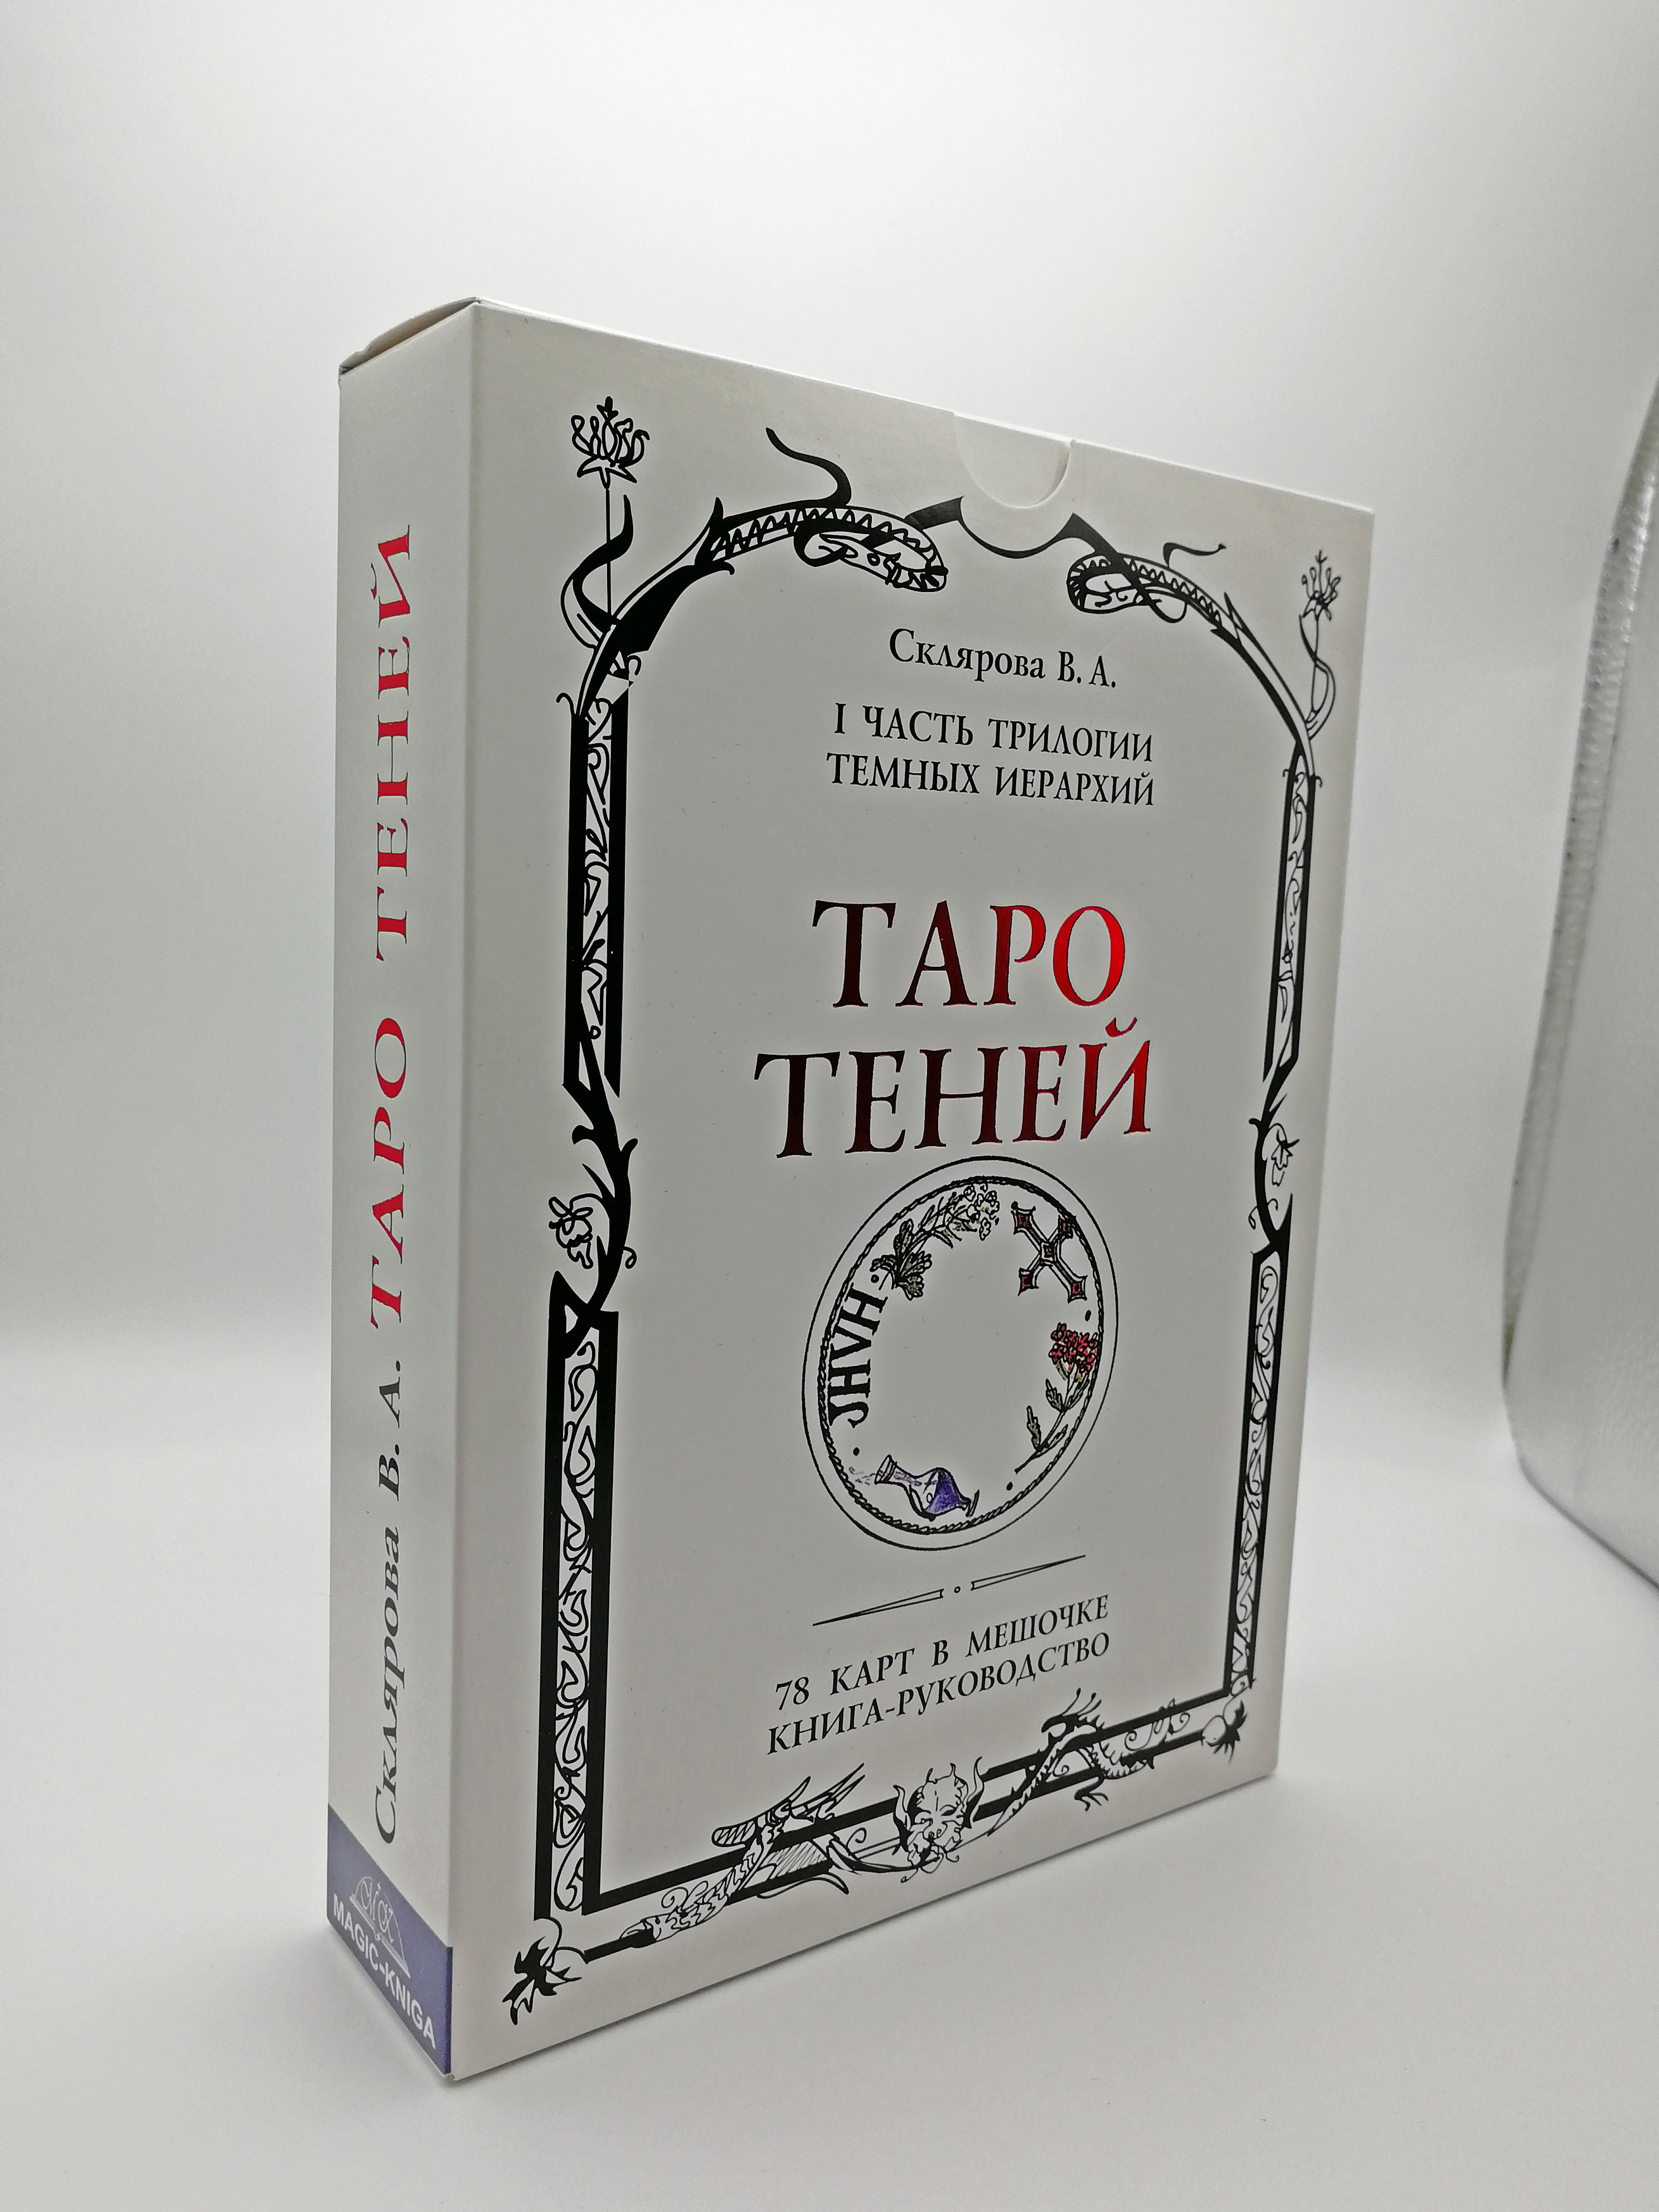 Таро Теней Скляровой В.А. с книгой %% 